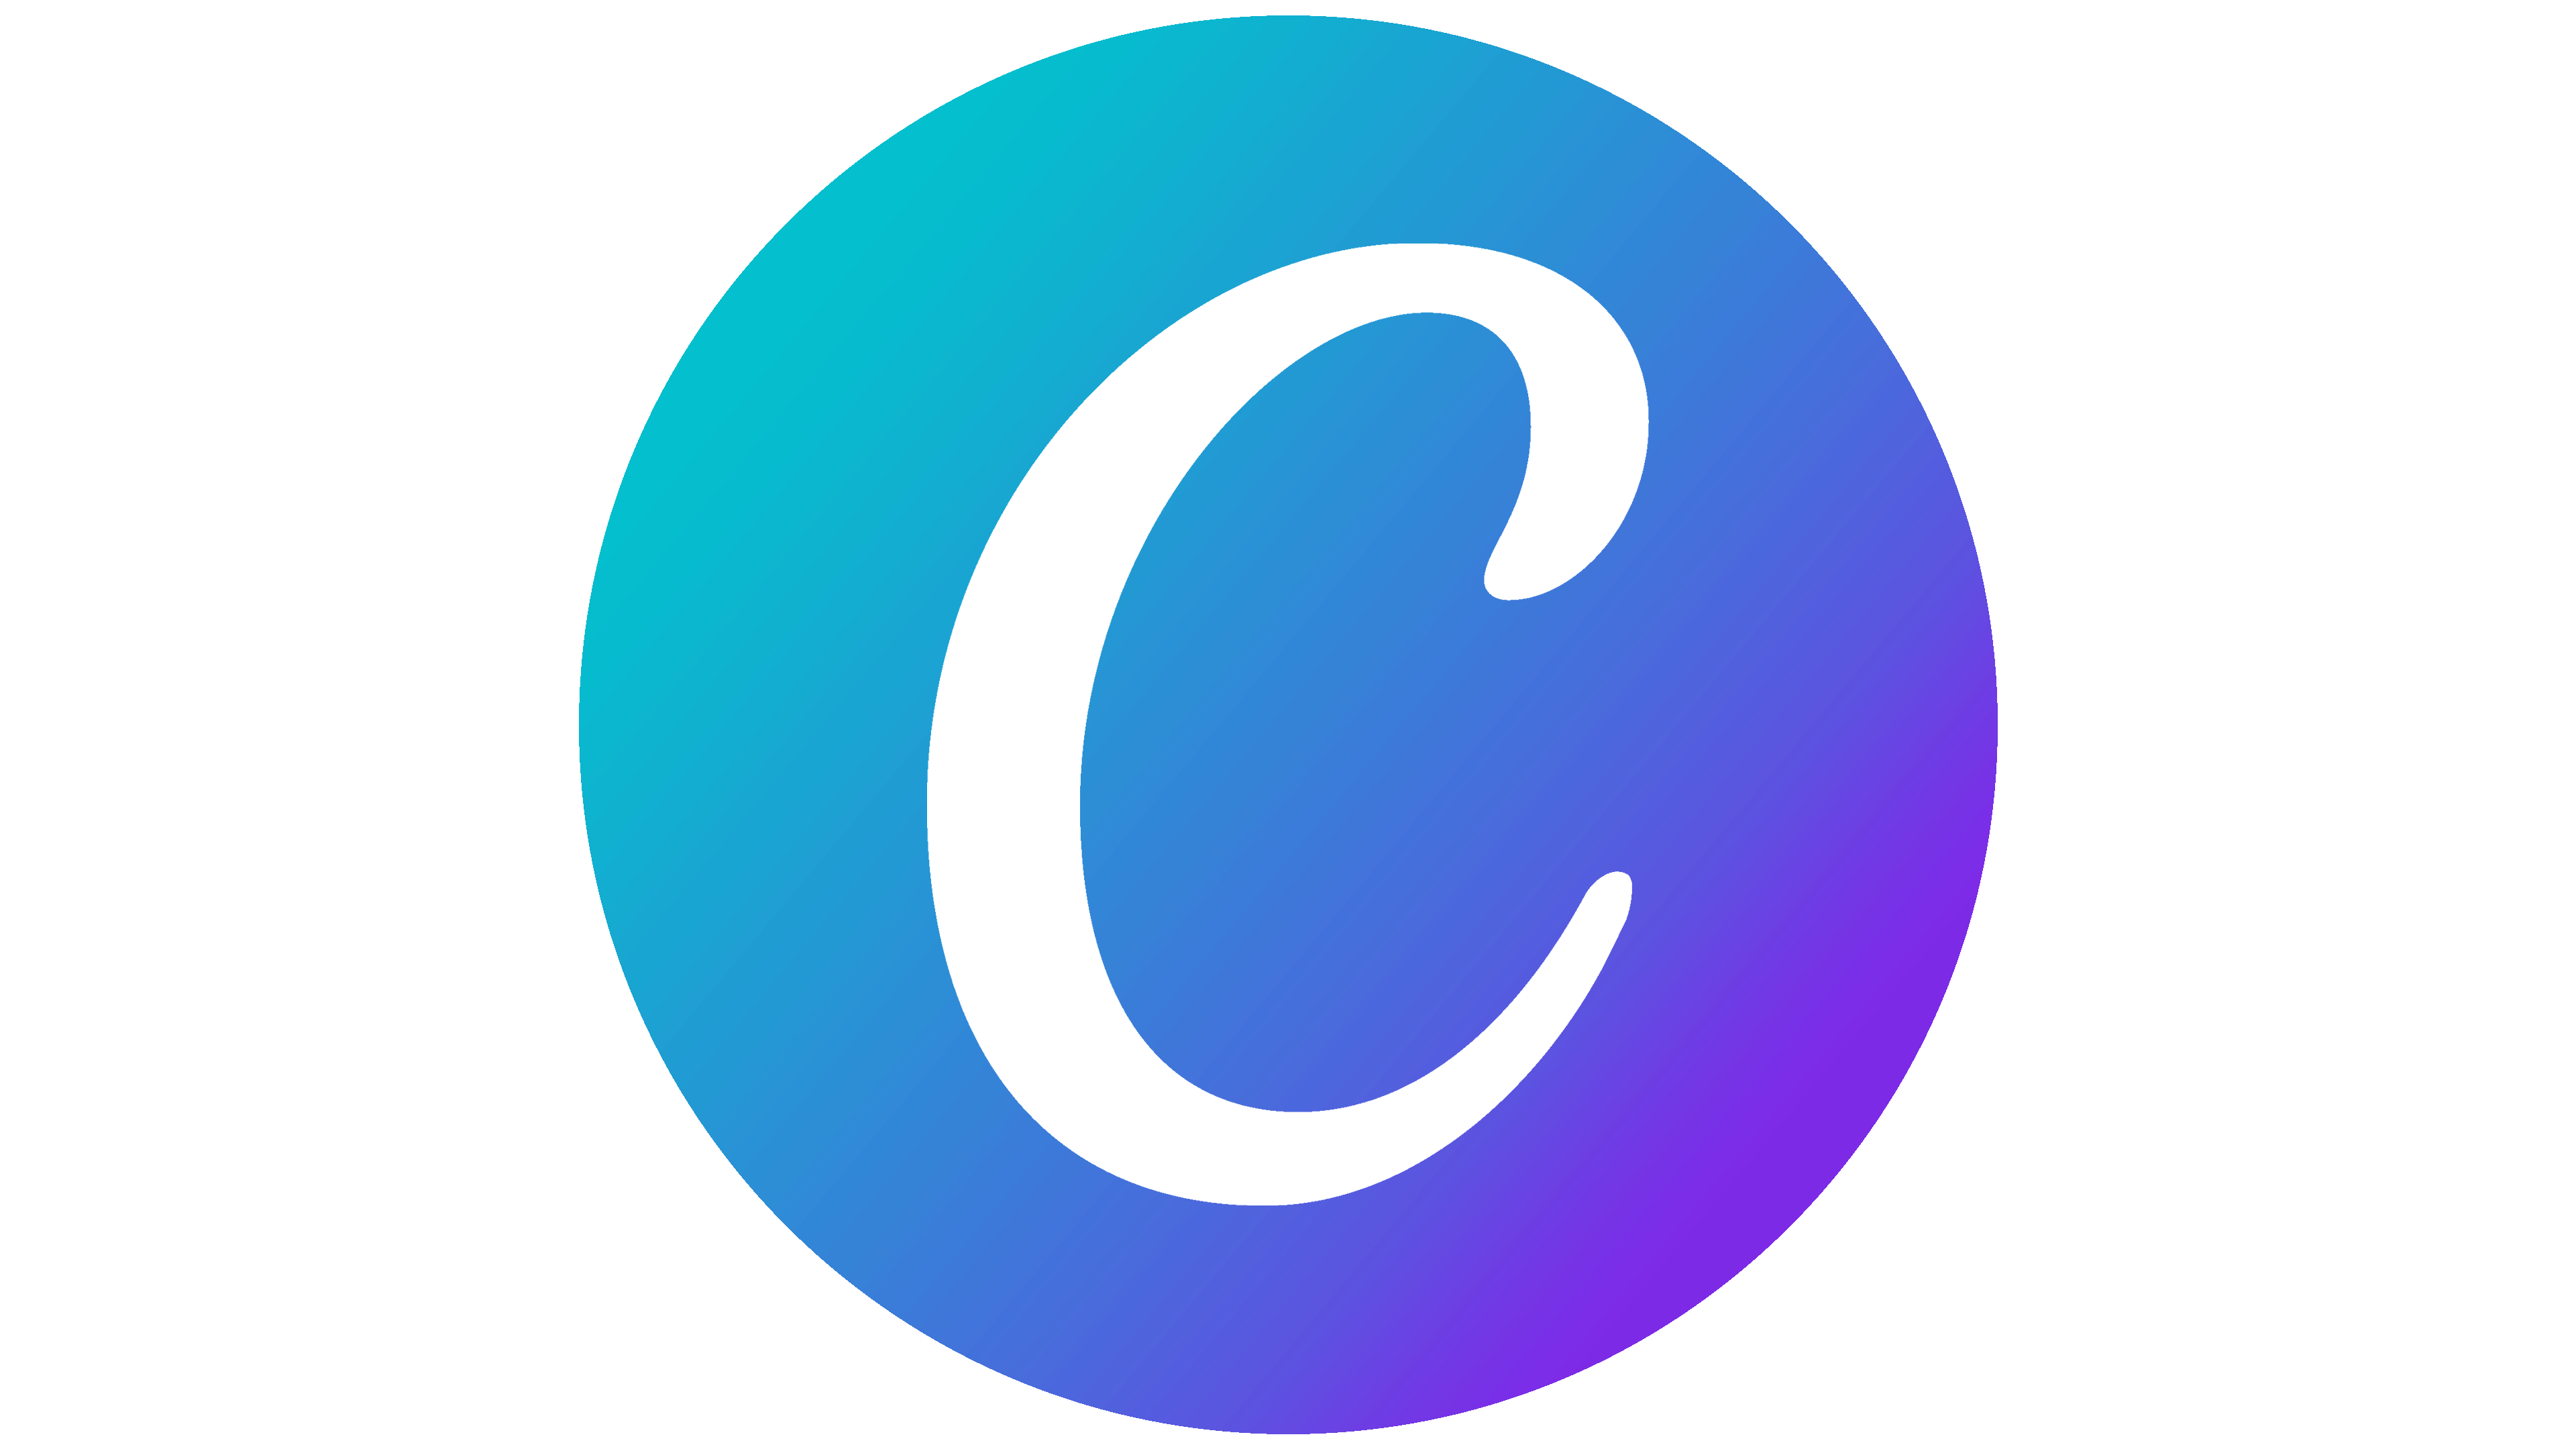 Canva graphic design platform with a new logo